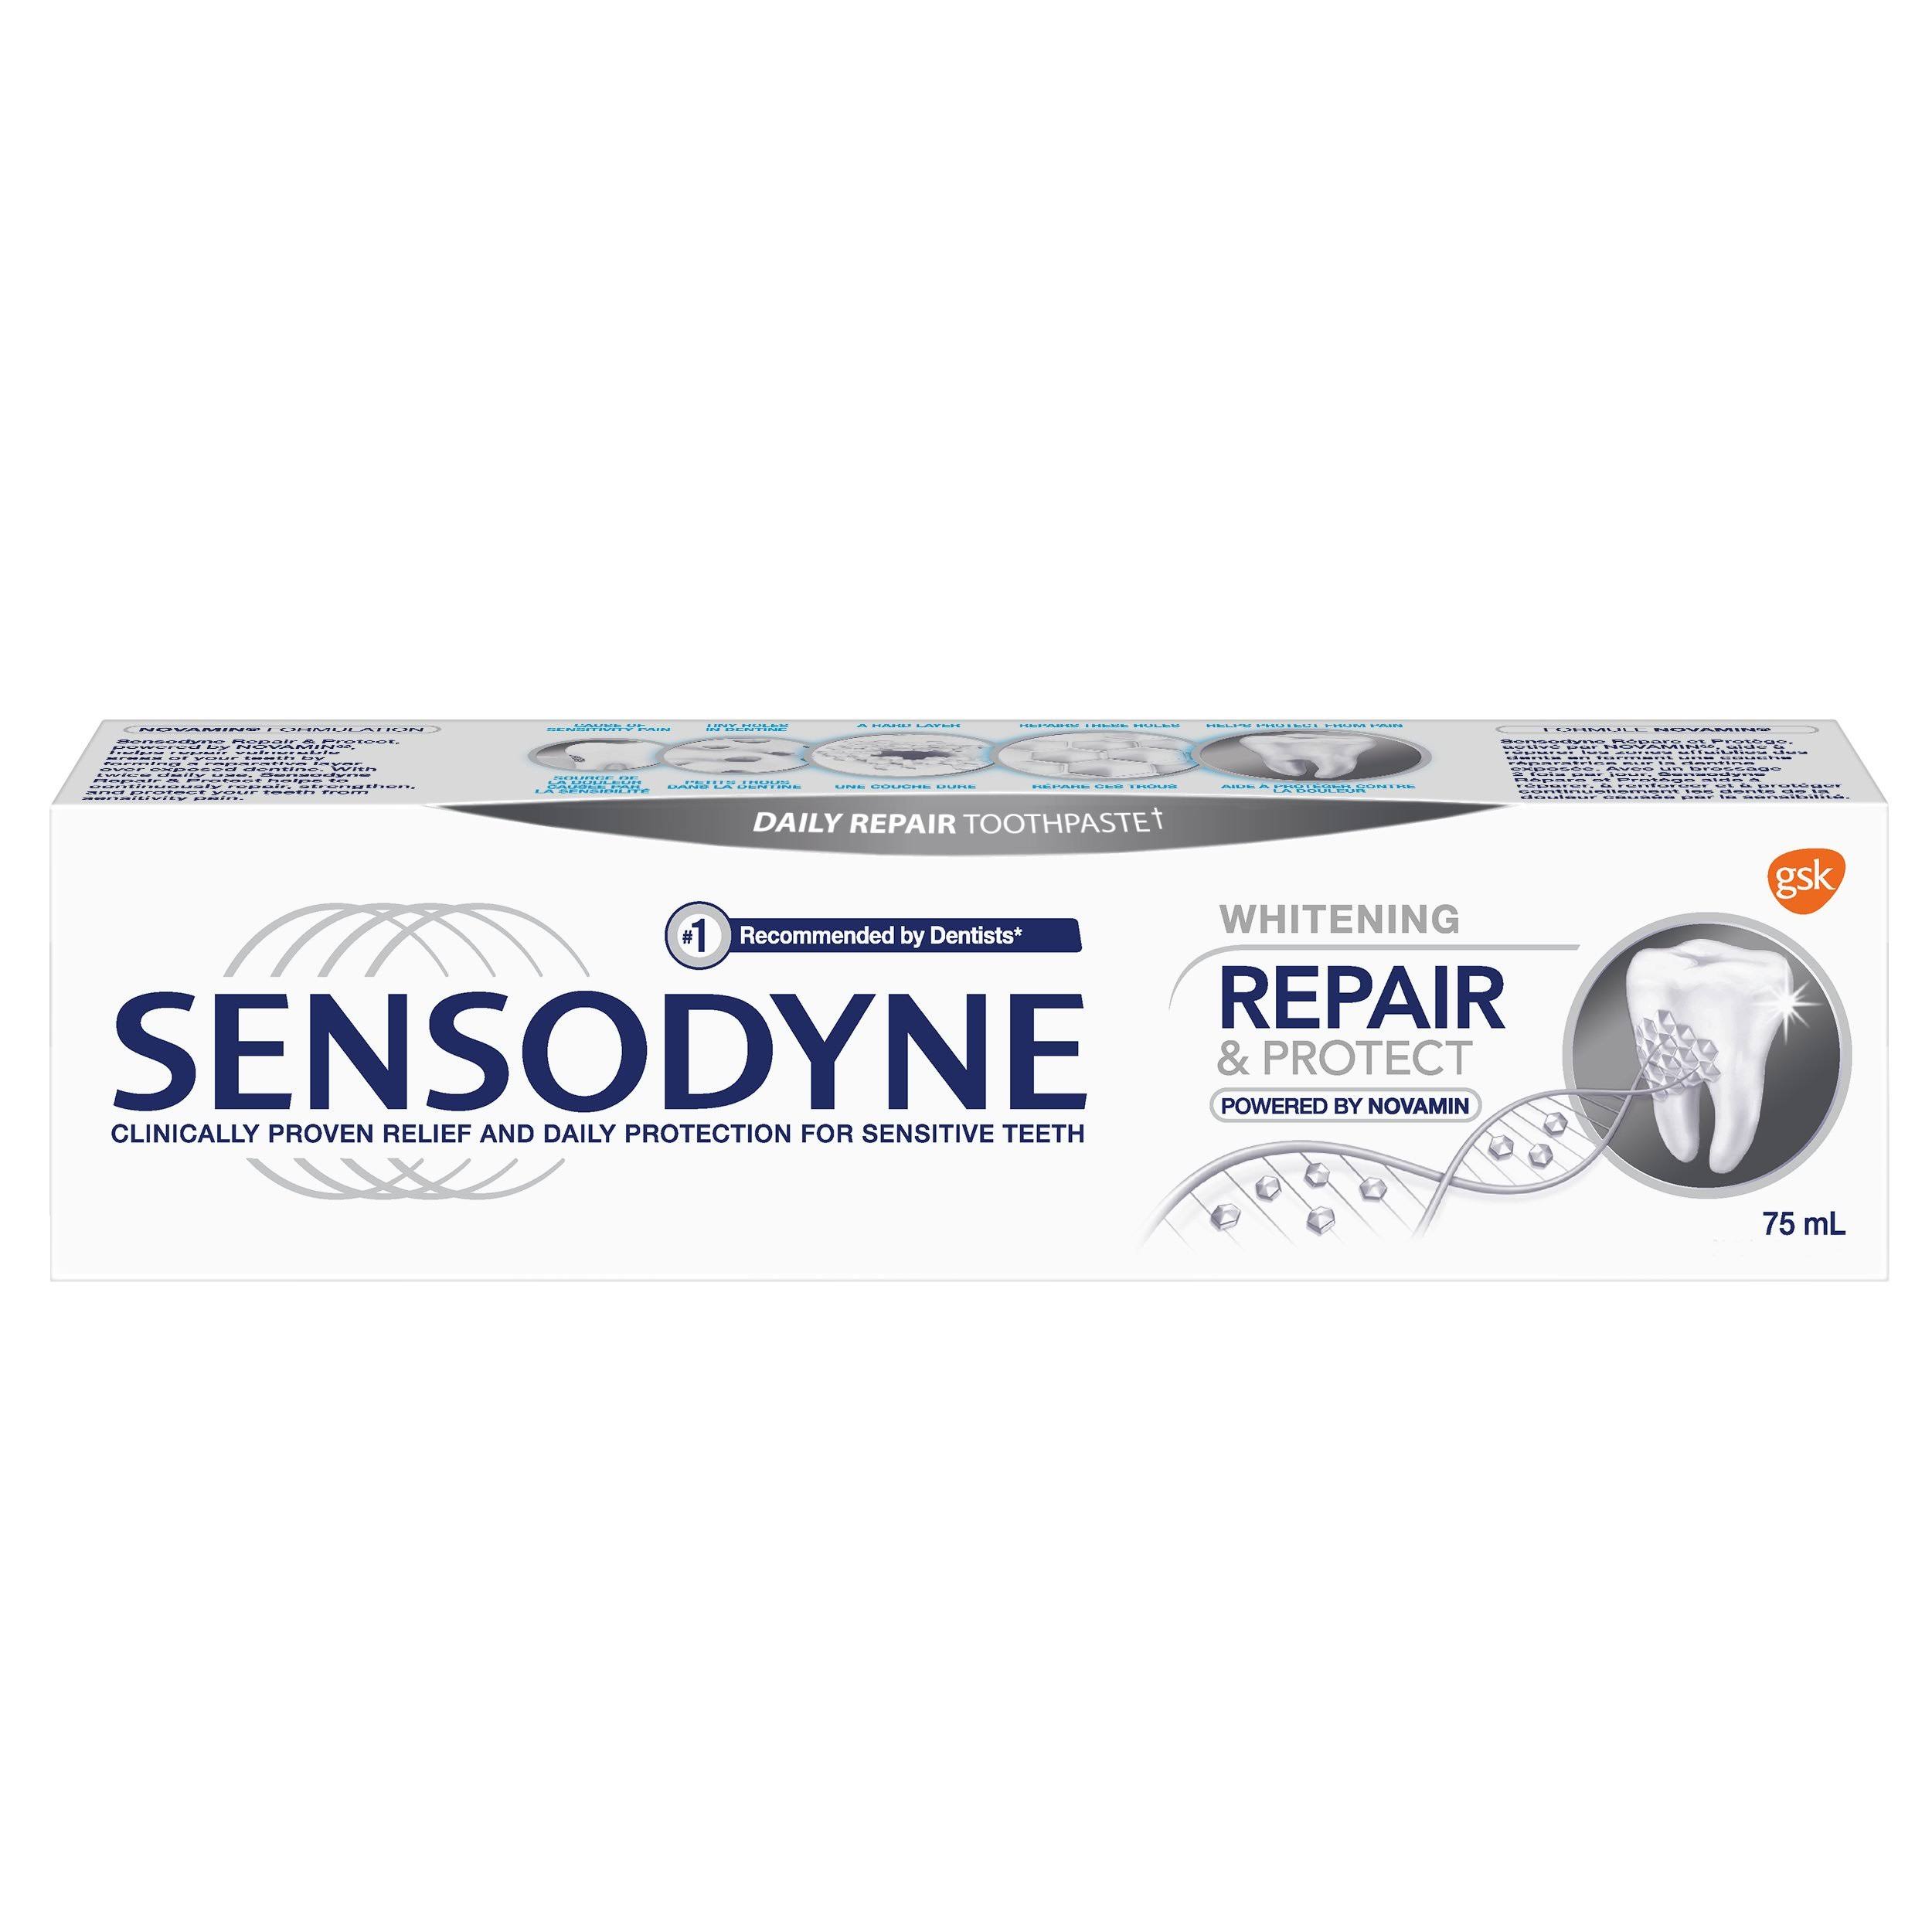 Sensodyne Repair & Protect Whitening Toothpaste - 75g